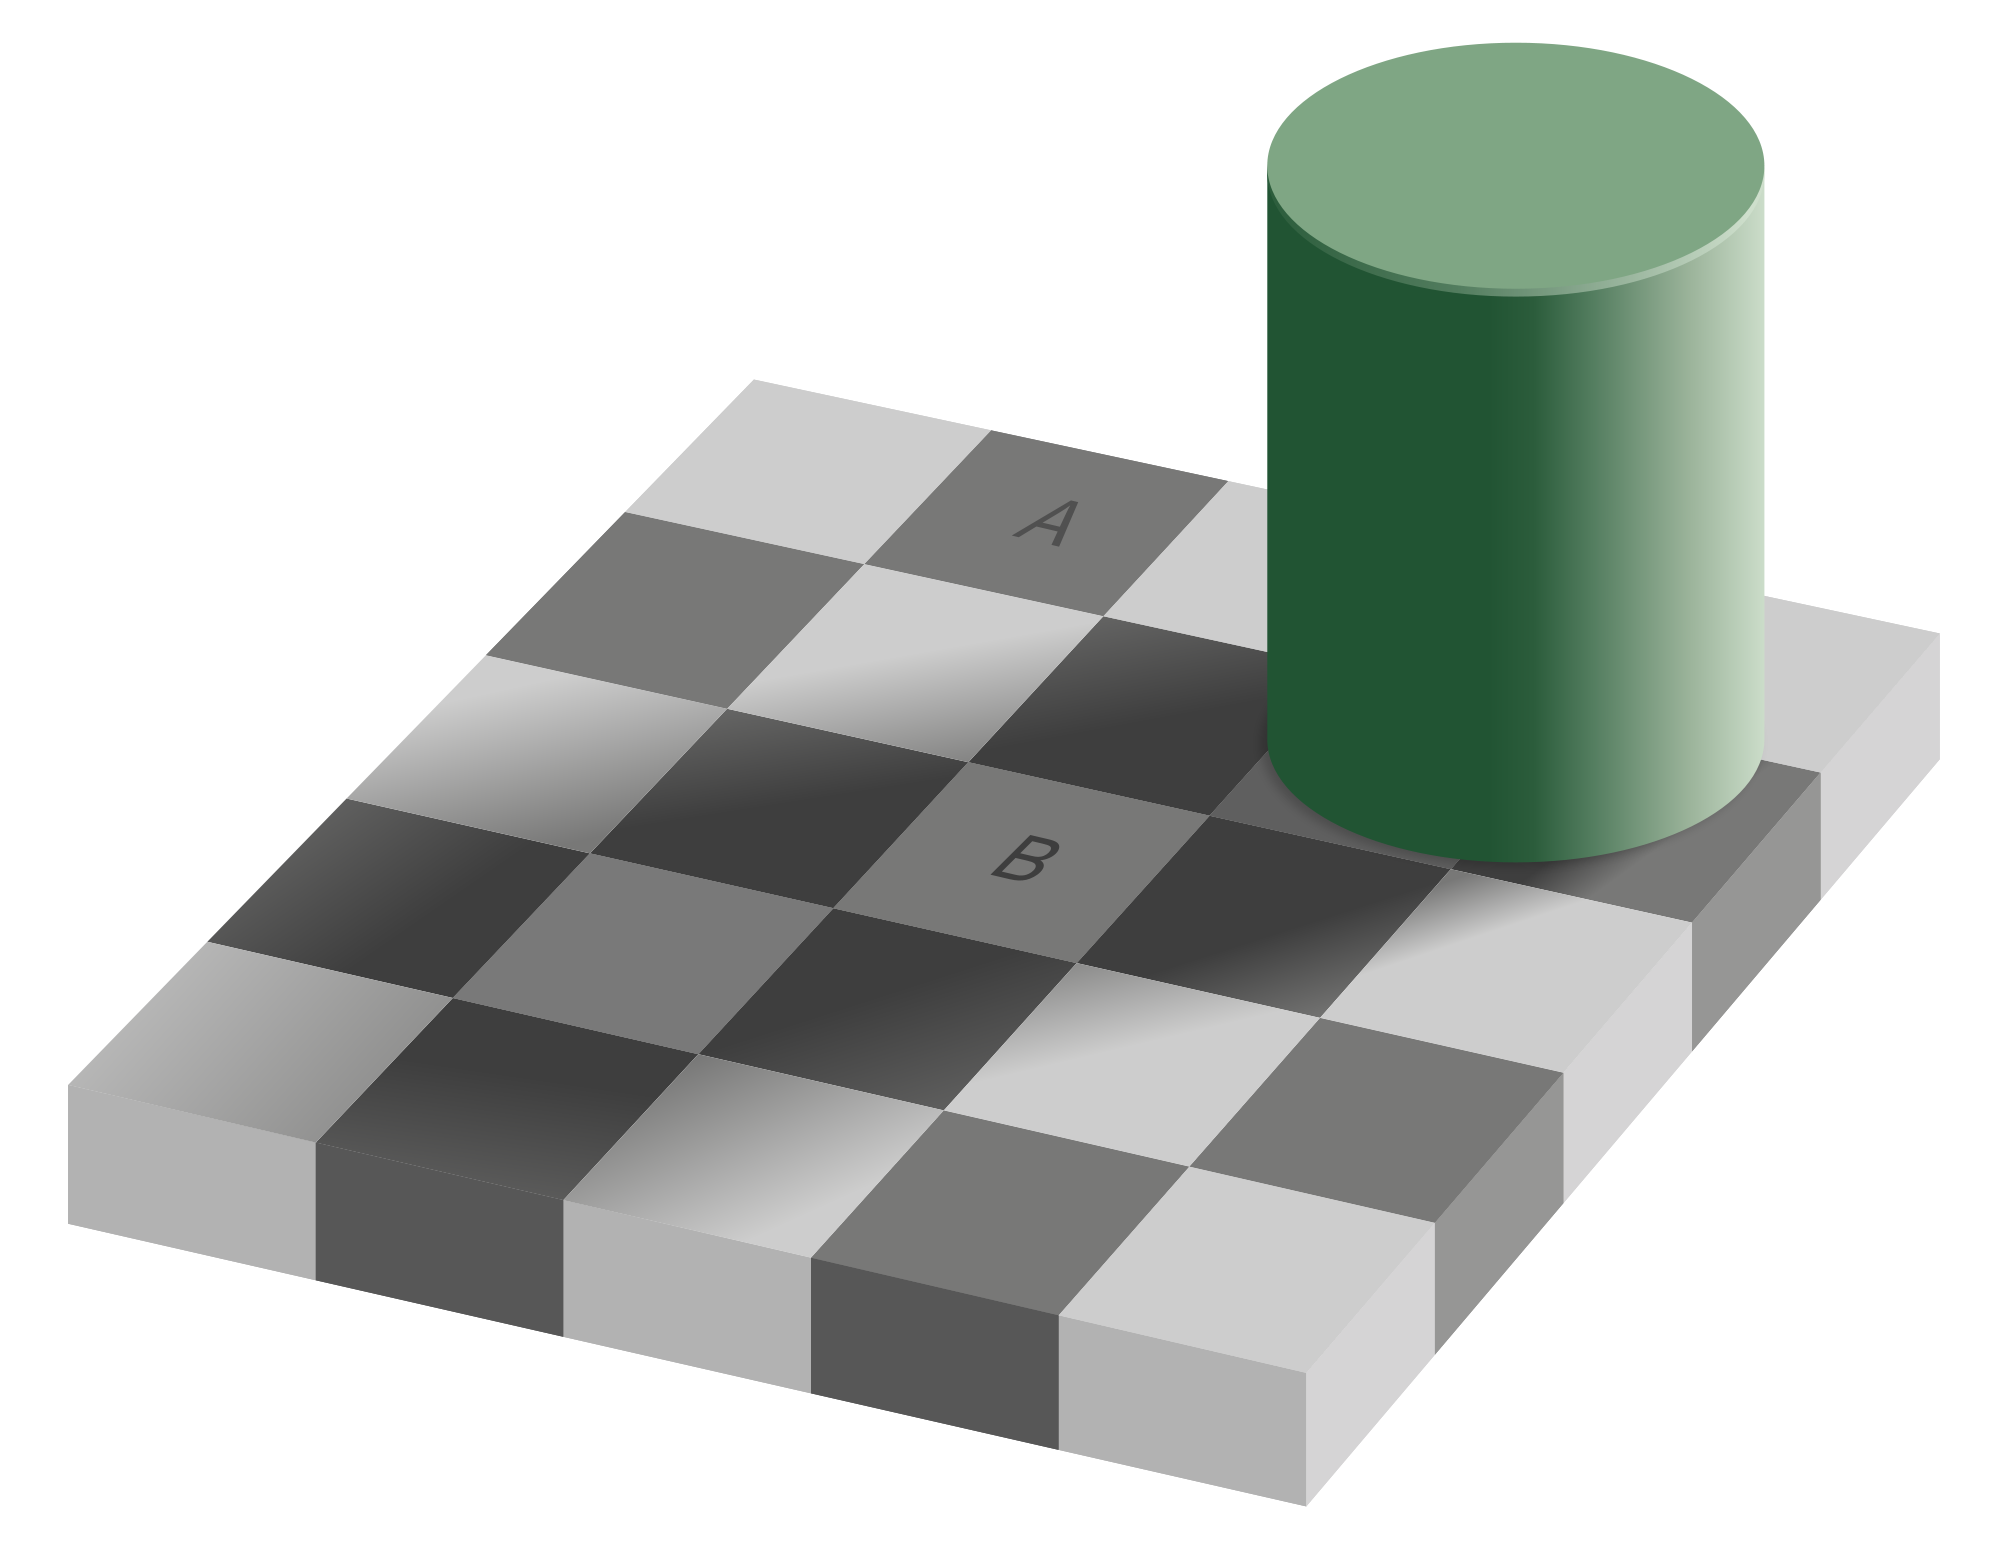 Illusion - Wikipedia